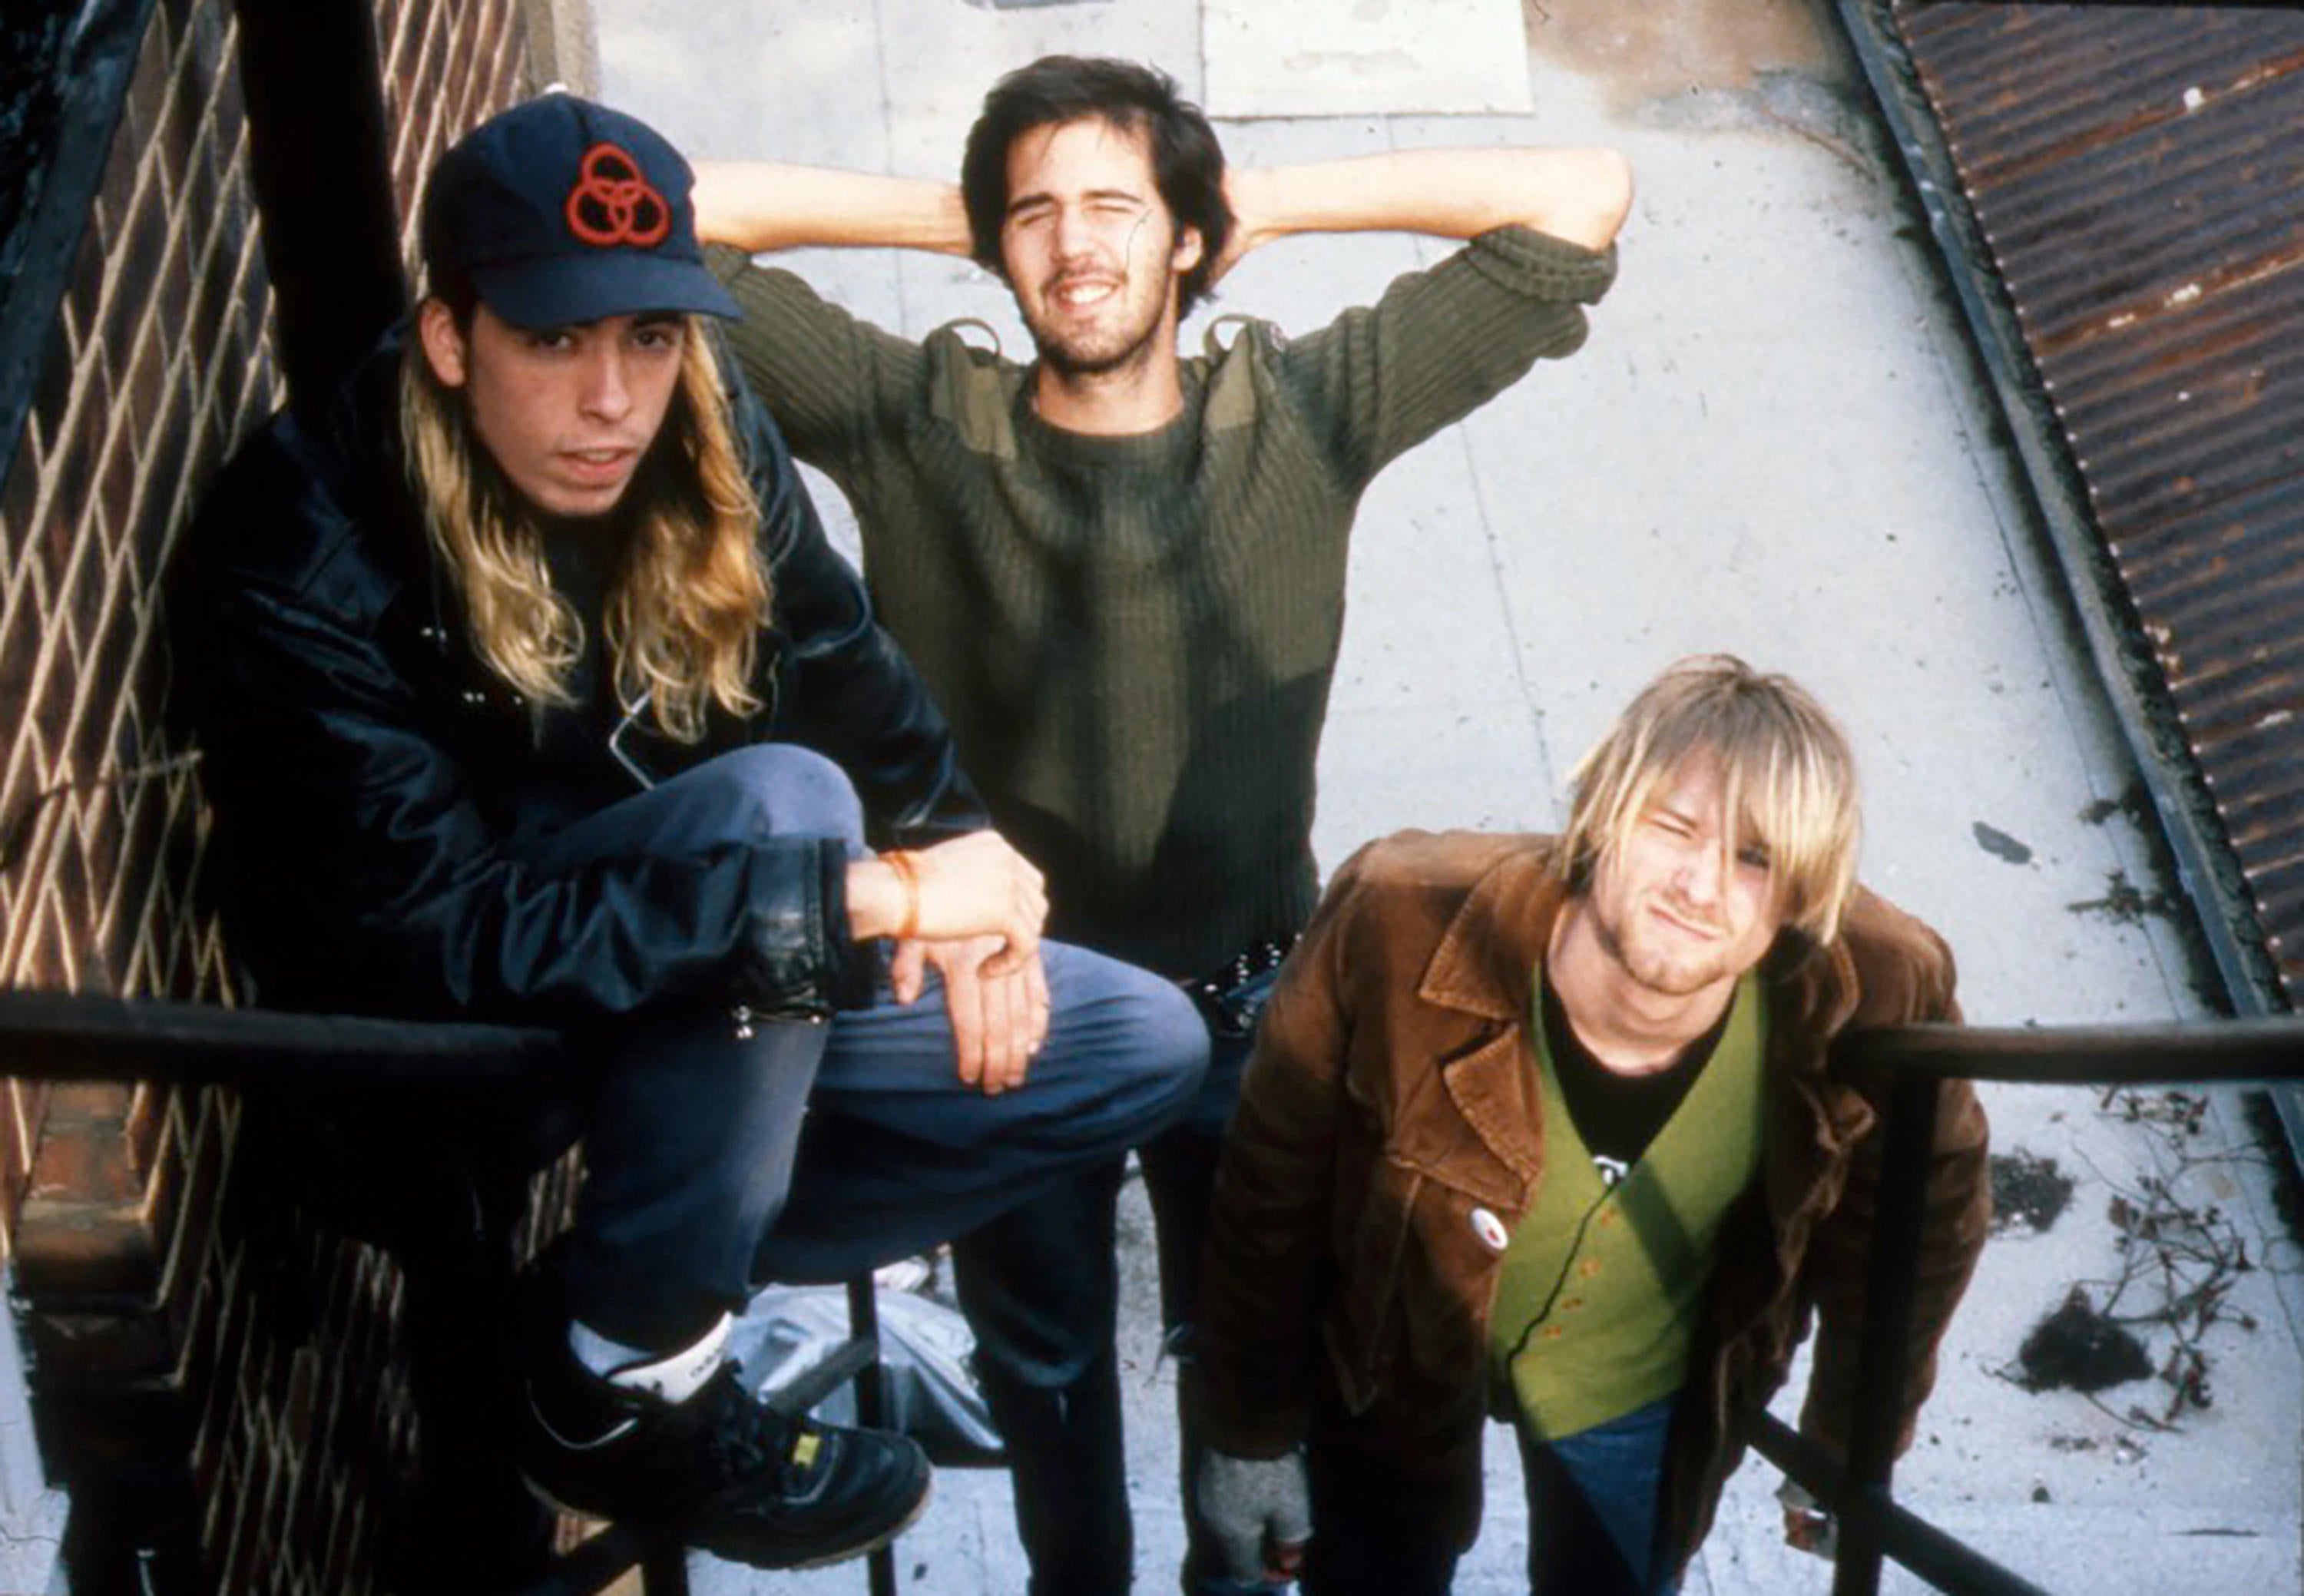 From left: Dave Grohl, Krist Novoselic, Kurt Cobain